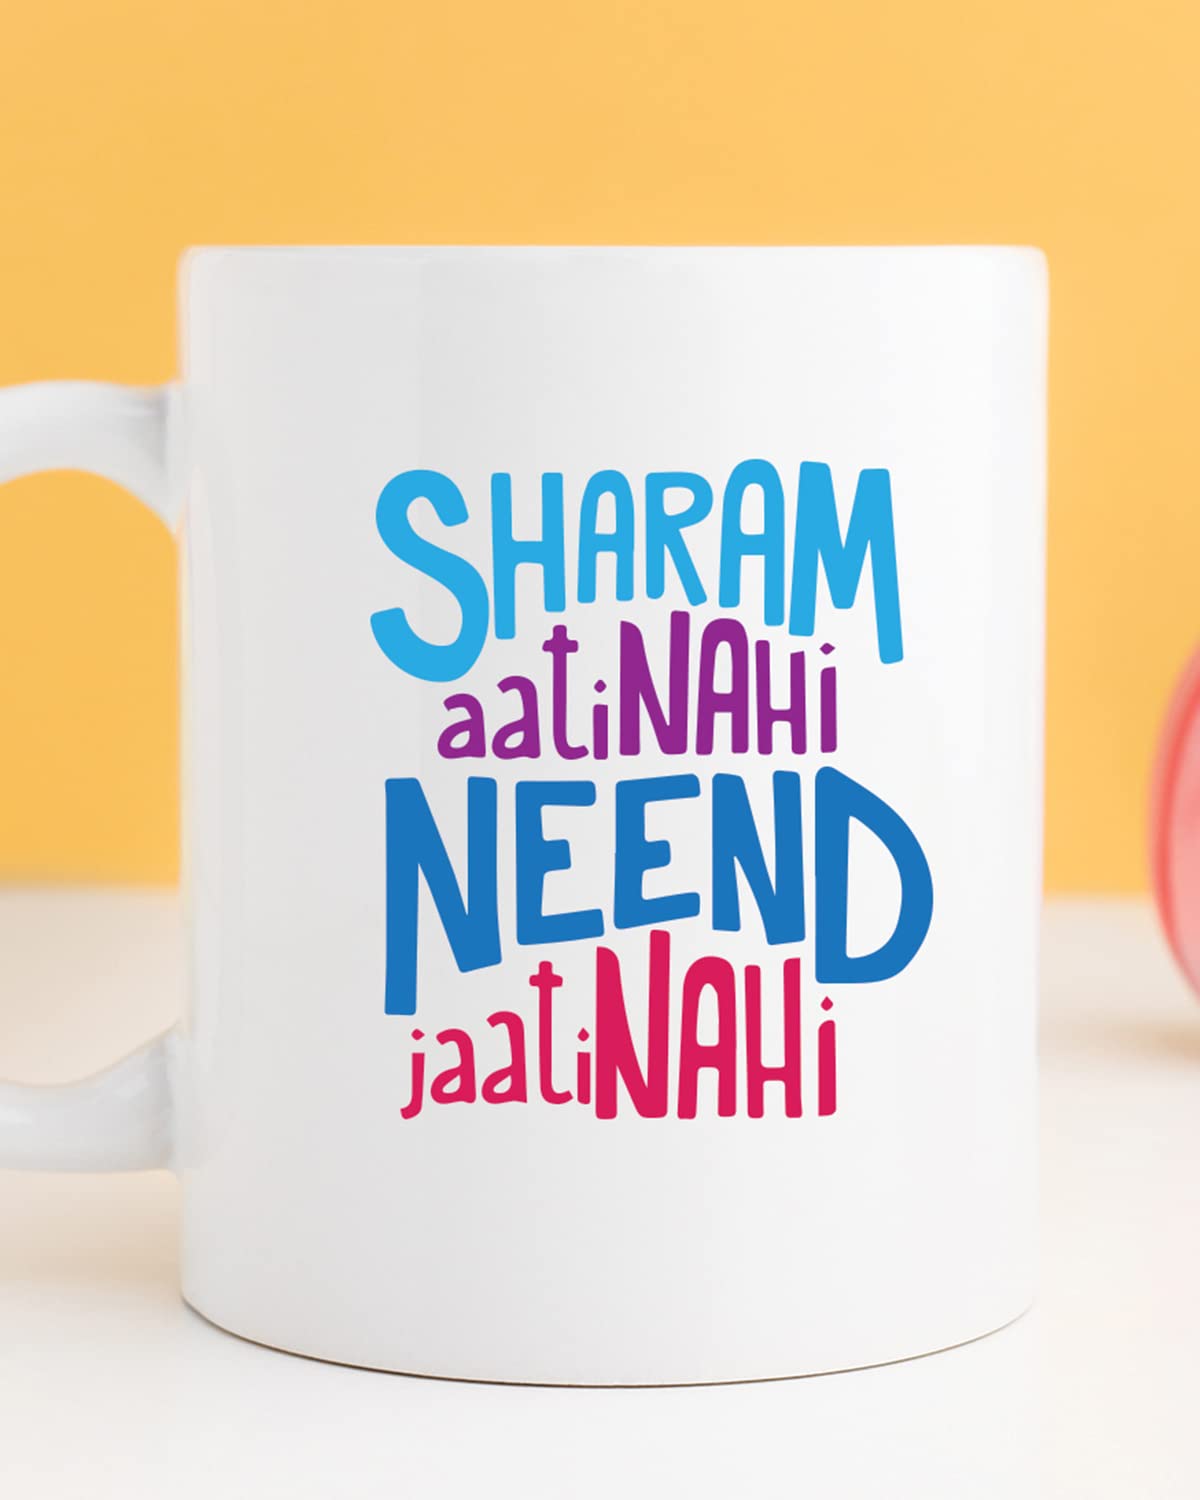 SHARAM AATI NAHI NEEND JAATI NAHI Coffee Mug - Gift for Friend, Birthday Gift, Birthday Mug, Motivational Quotes Mug, Mugs with Funny & Funky Dialogues, Bollywood Mugs, Funny Mugs for Him & Her